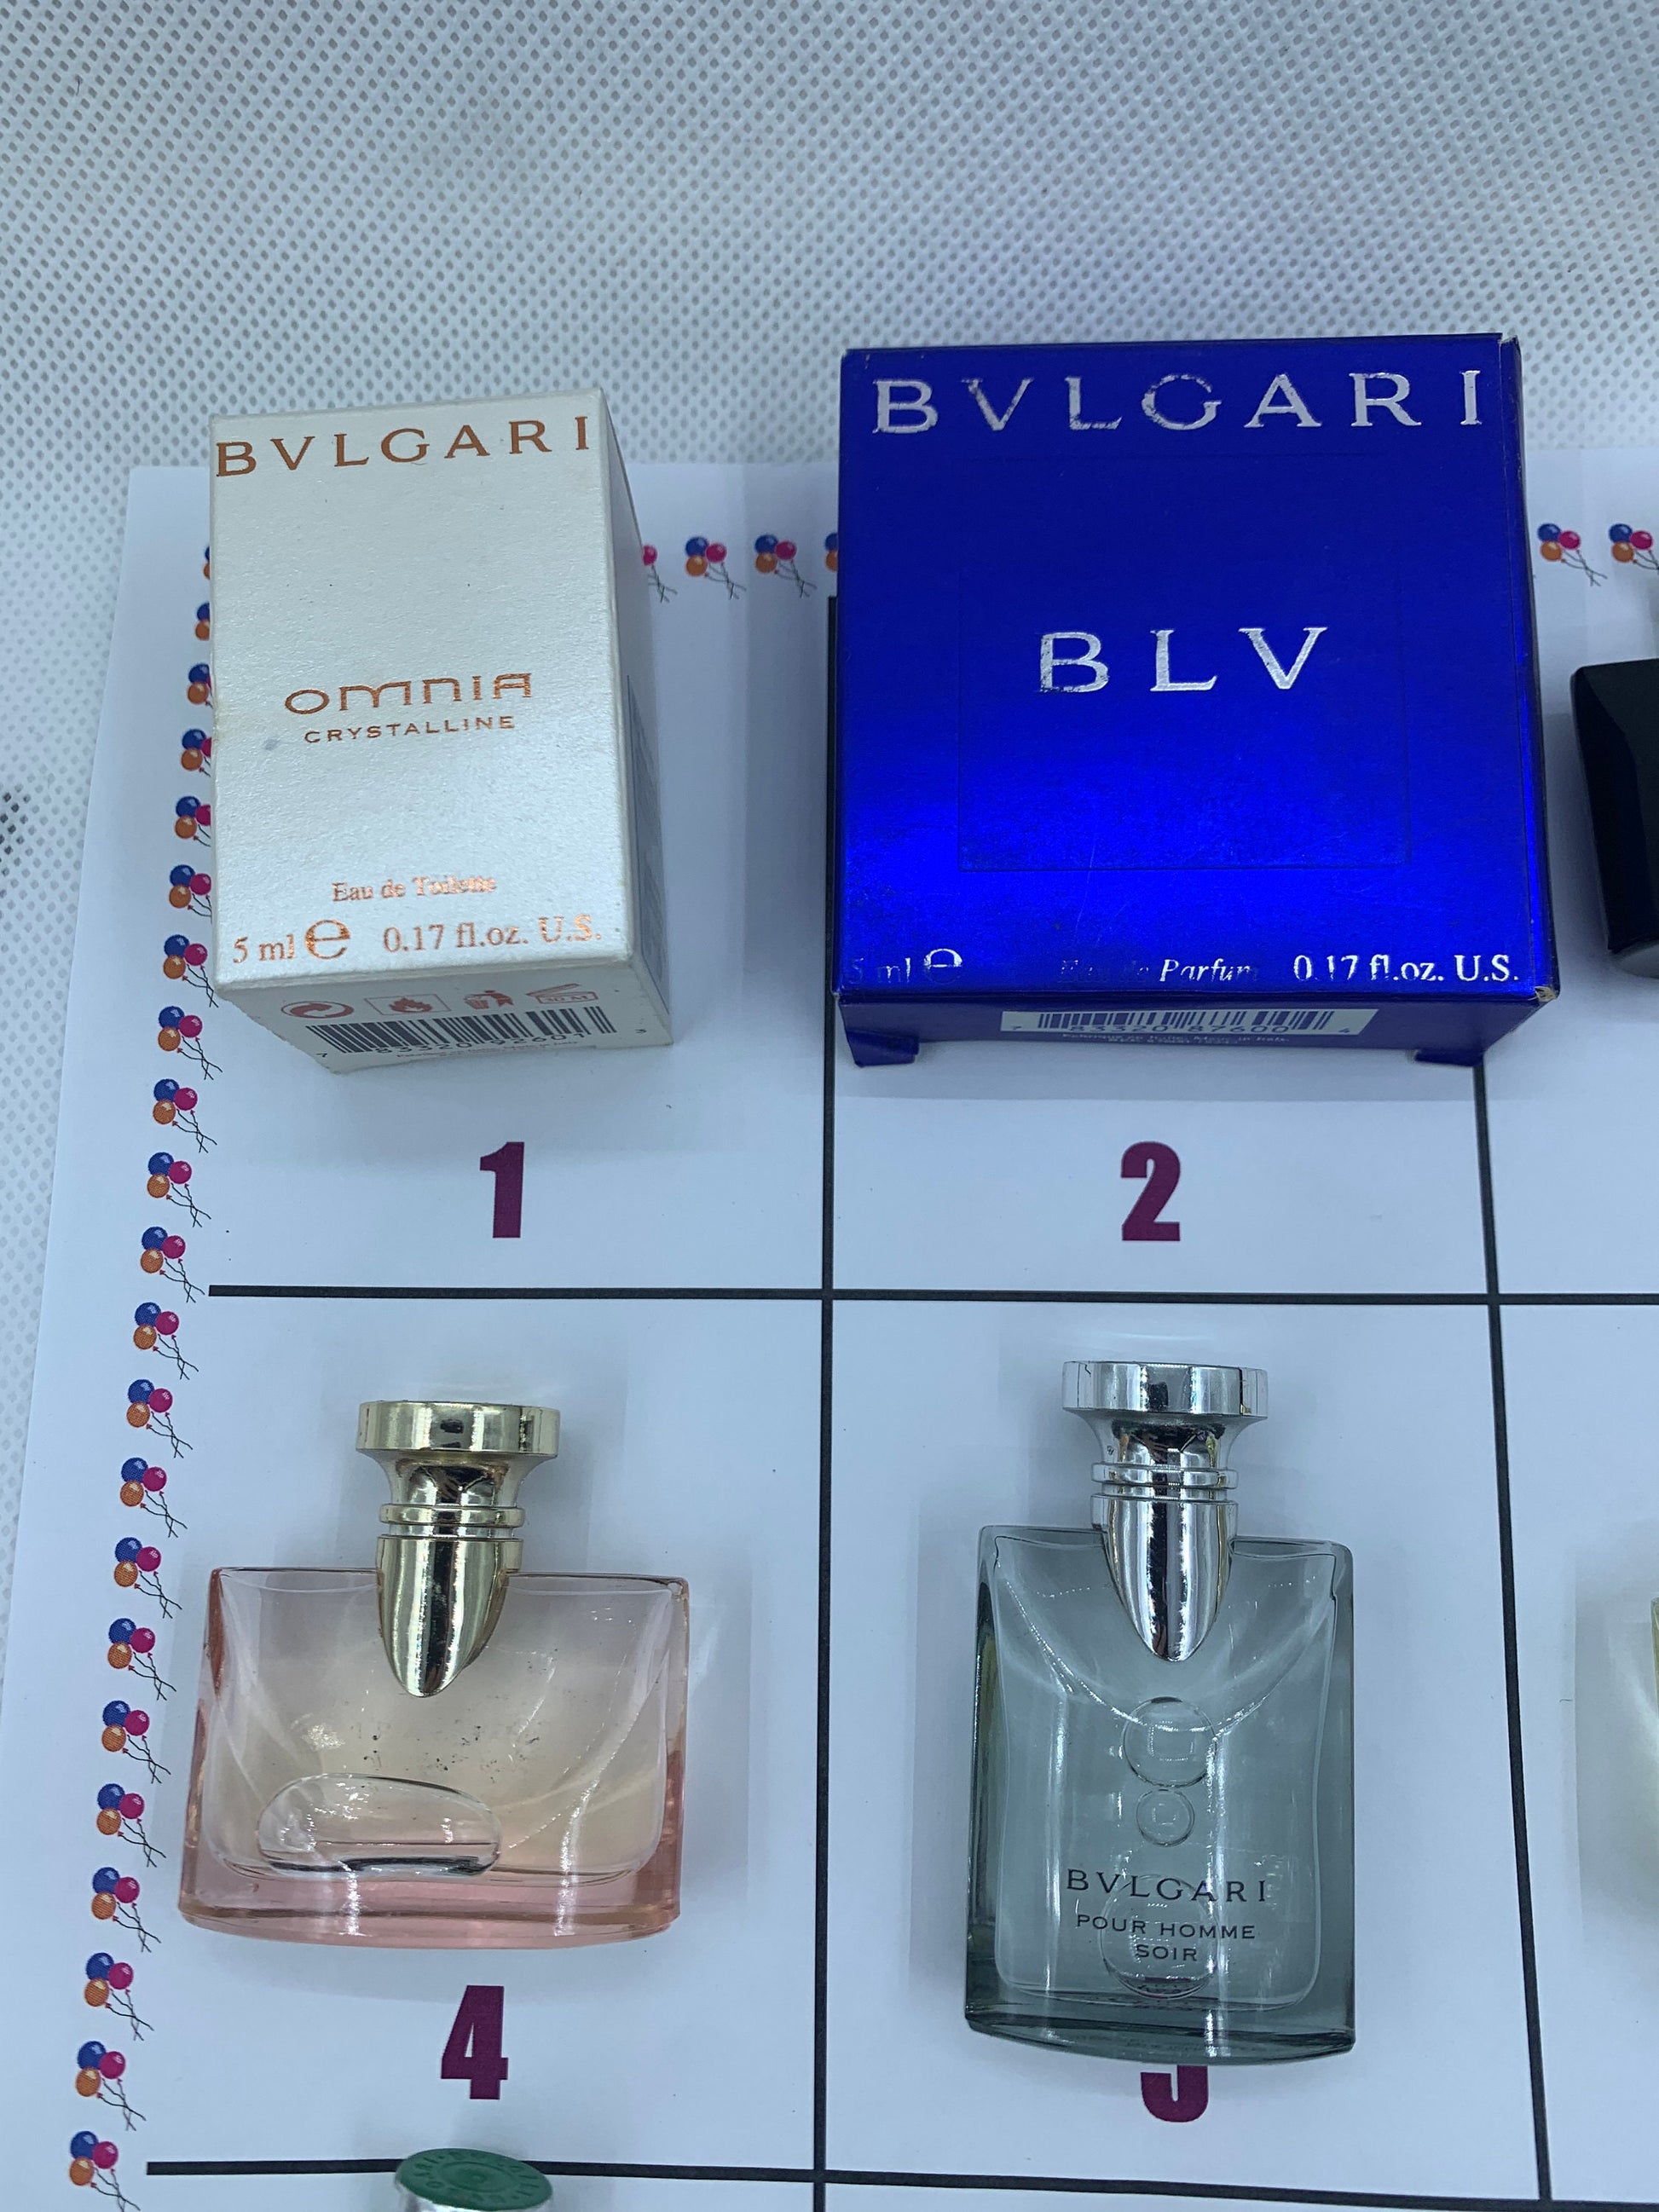 Bvlgari Bvlgari Blv By Bvlgari for Men - 5 Ml Edt Spray (mini), 0.17 Ounce